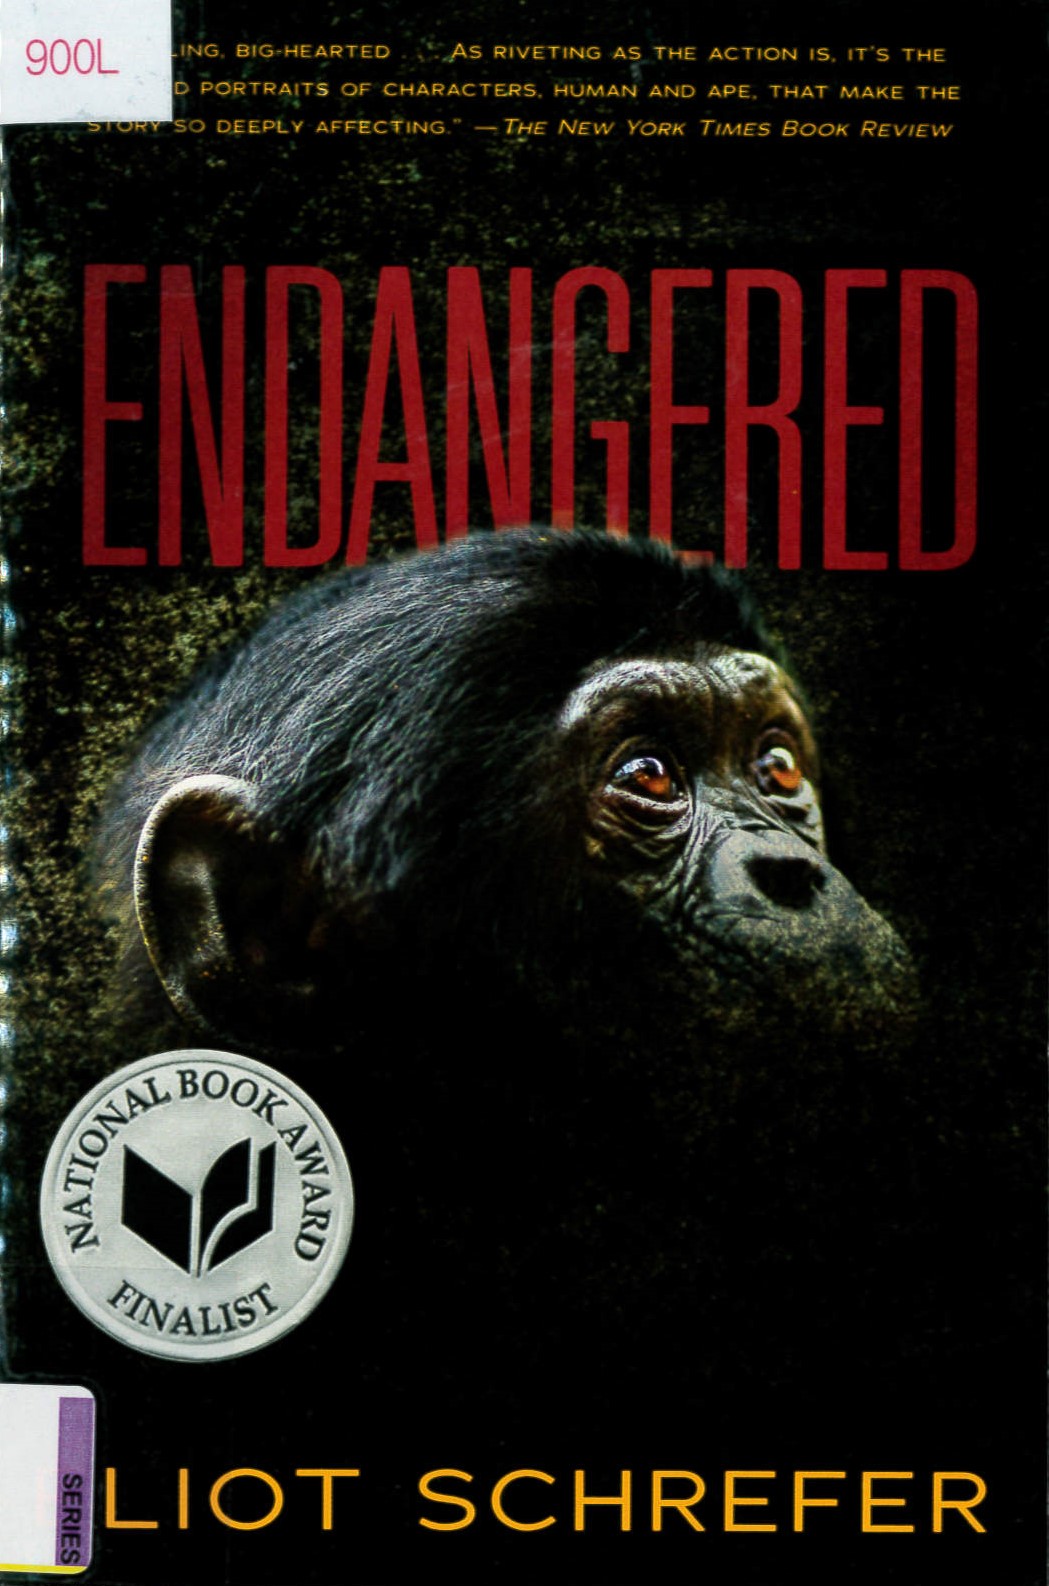 Endangered /